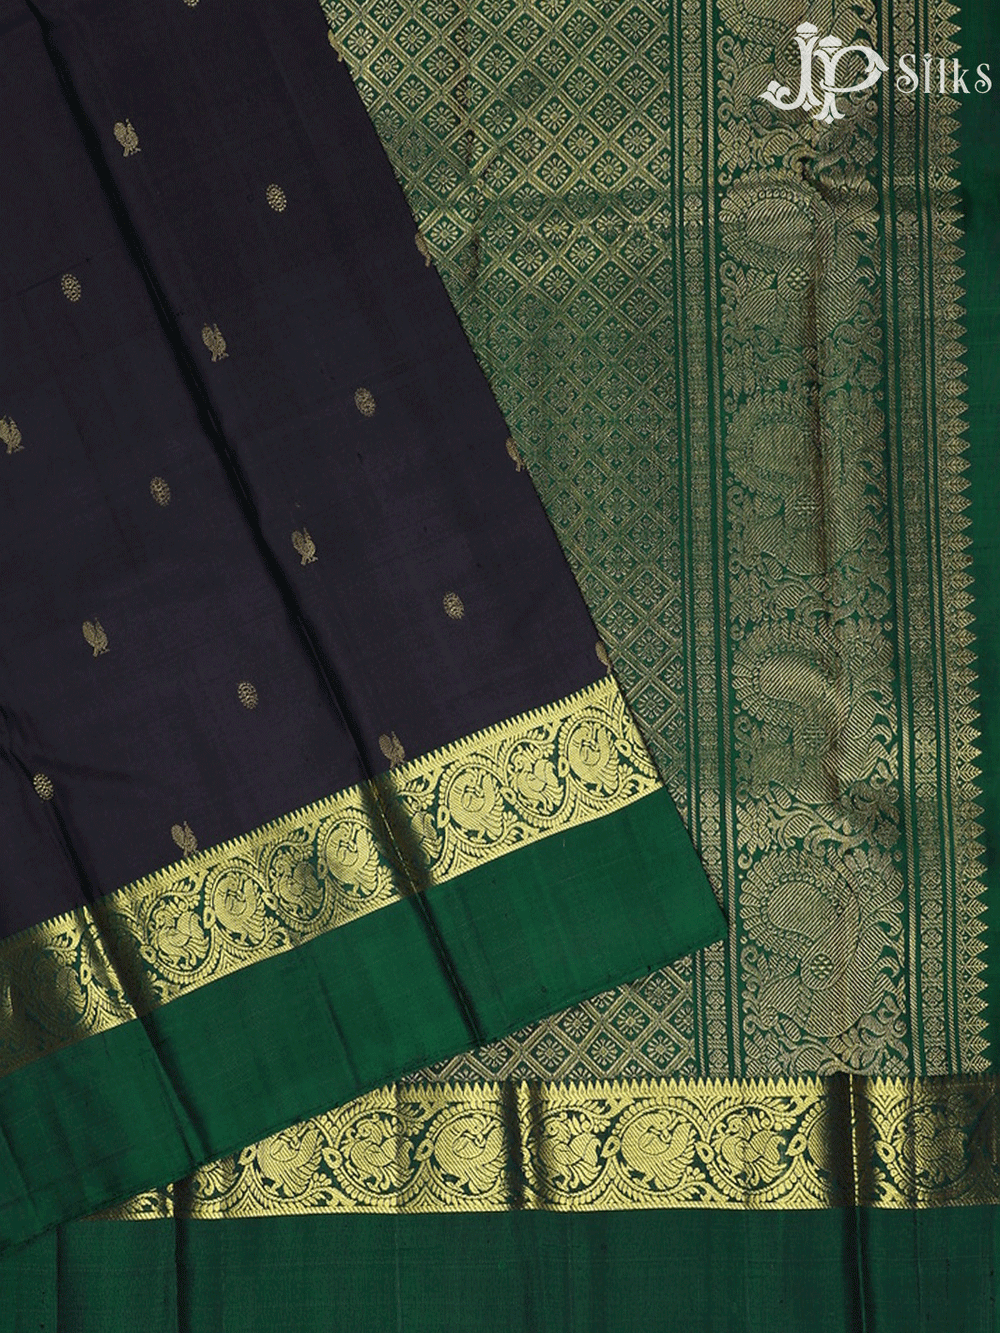 Black and Bottle Green Small Annam Kanchipuram Silk Saree - A1090 - View 1